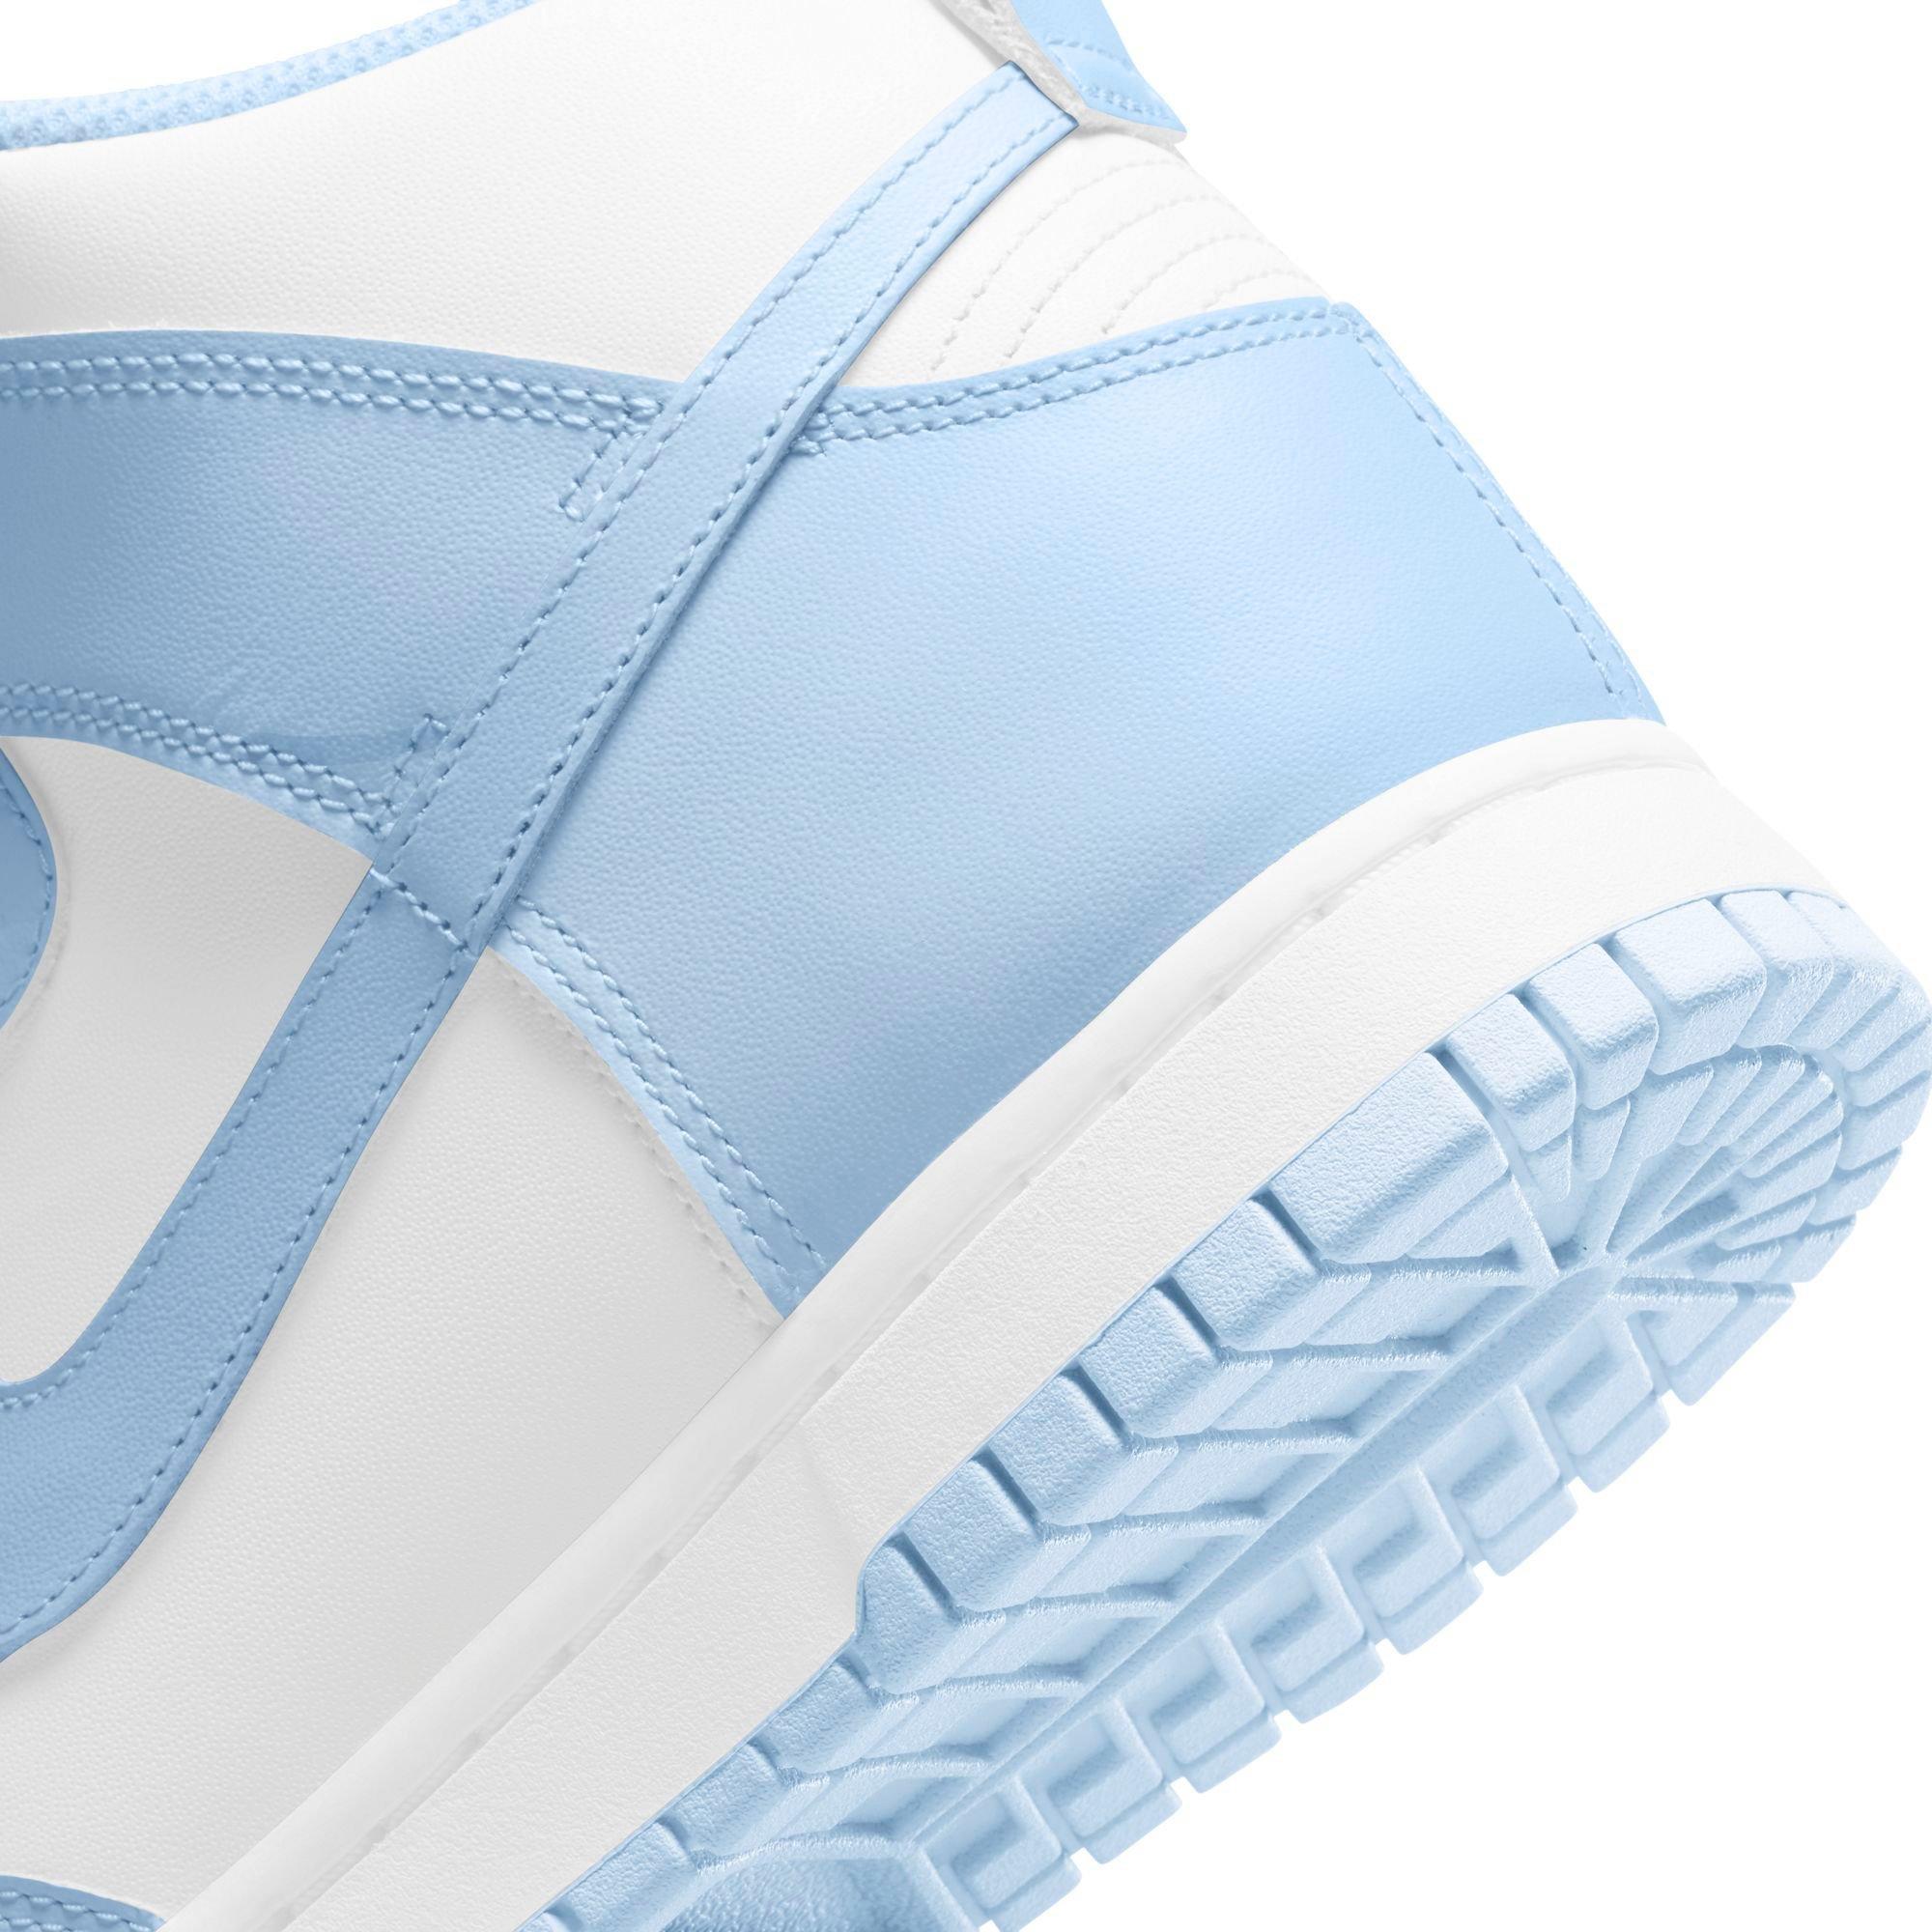 Sneakers Release – Nike Dunk High “Panda” White